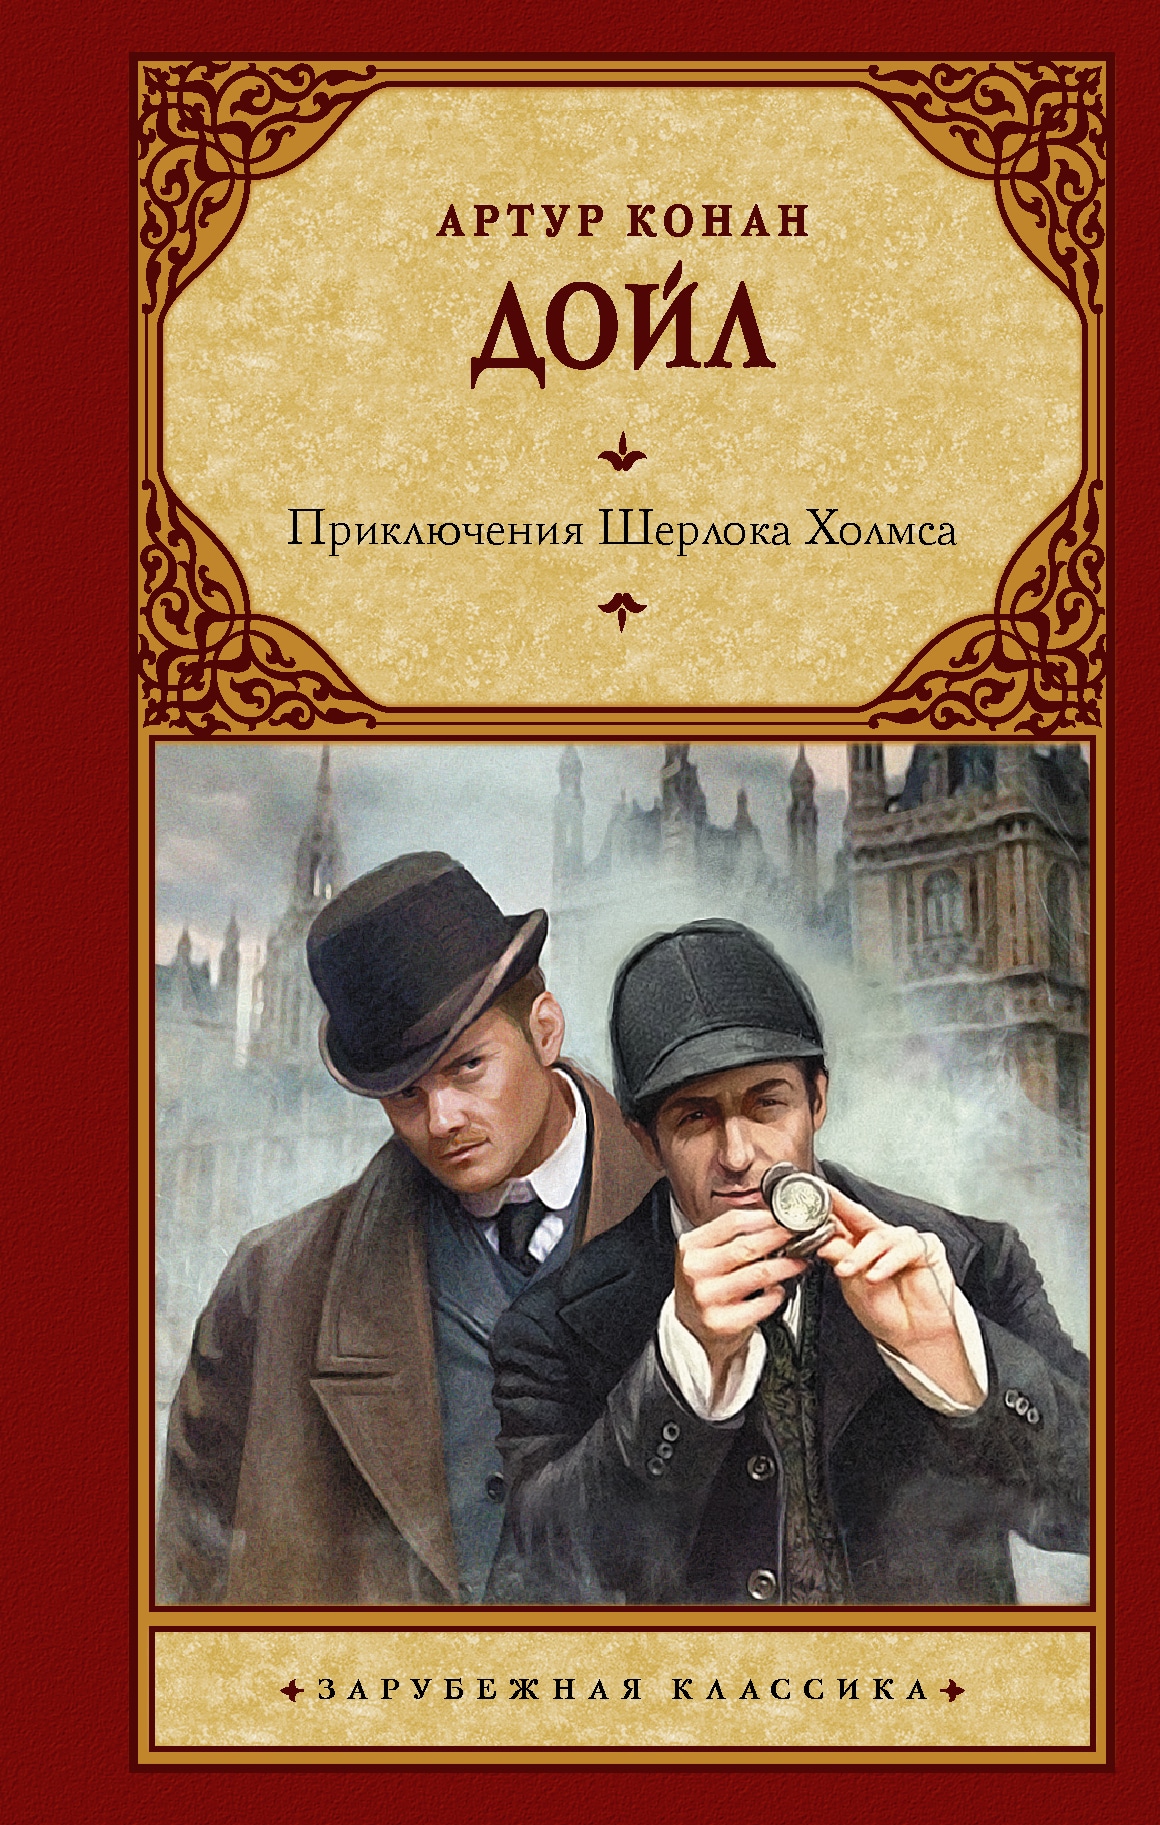 Book “Приключения Шерлока Холмса” by Дойл Артур Конан — July 19, 2021